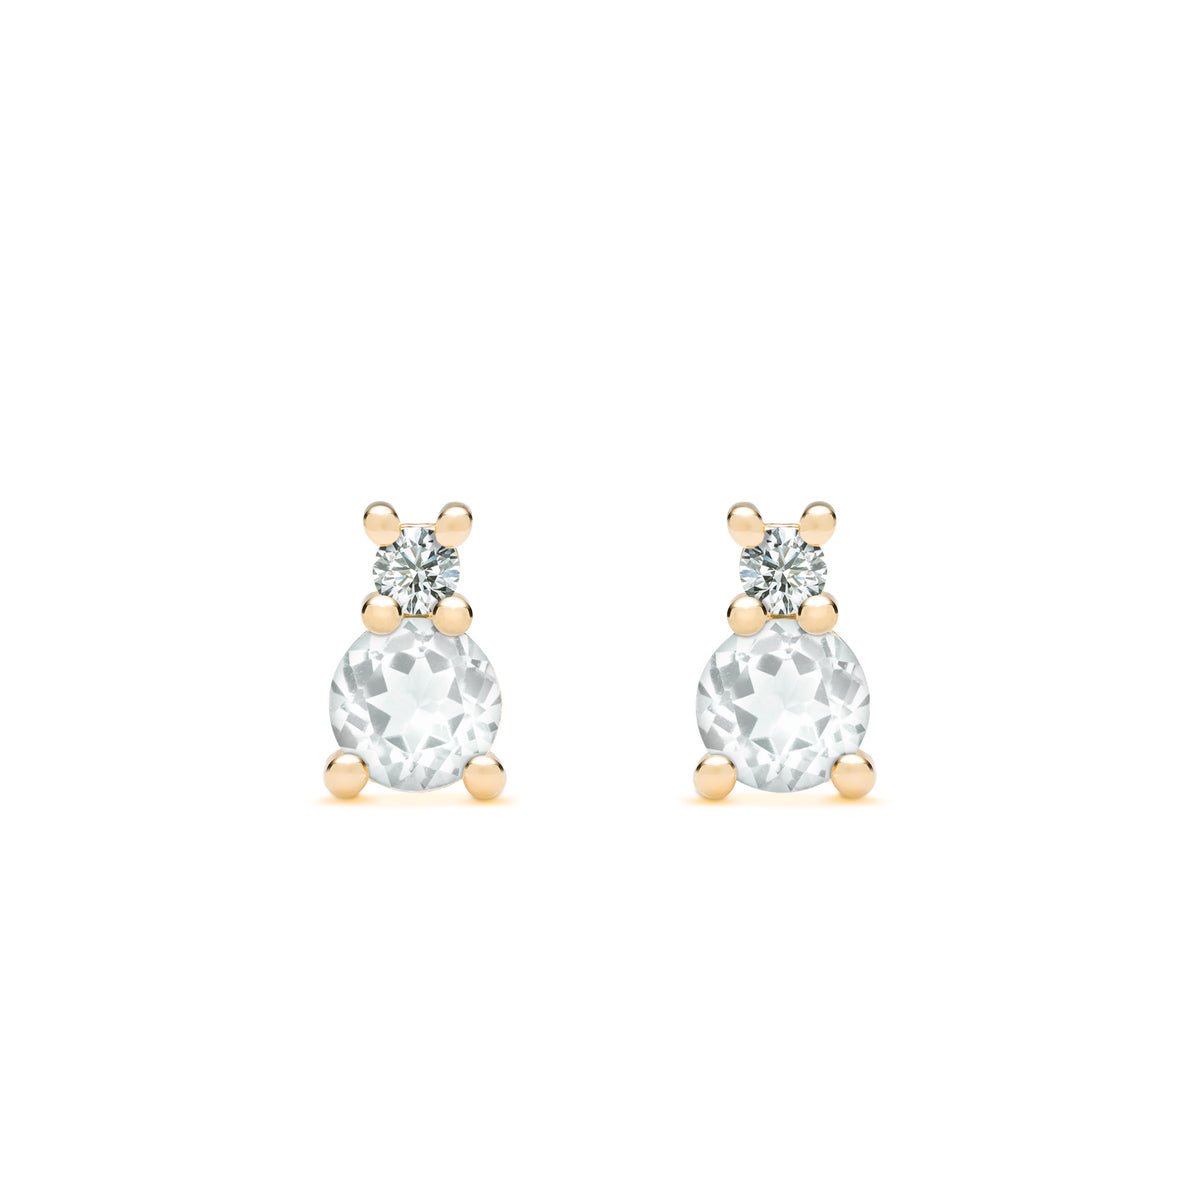 Minnie Mouse Birthstone Earrings 10K Gold Stud